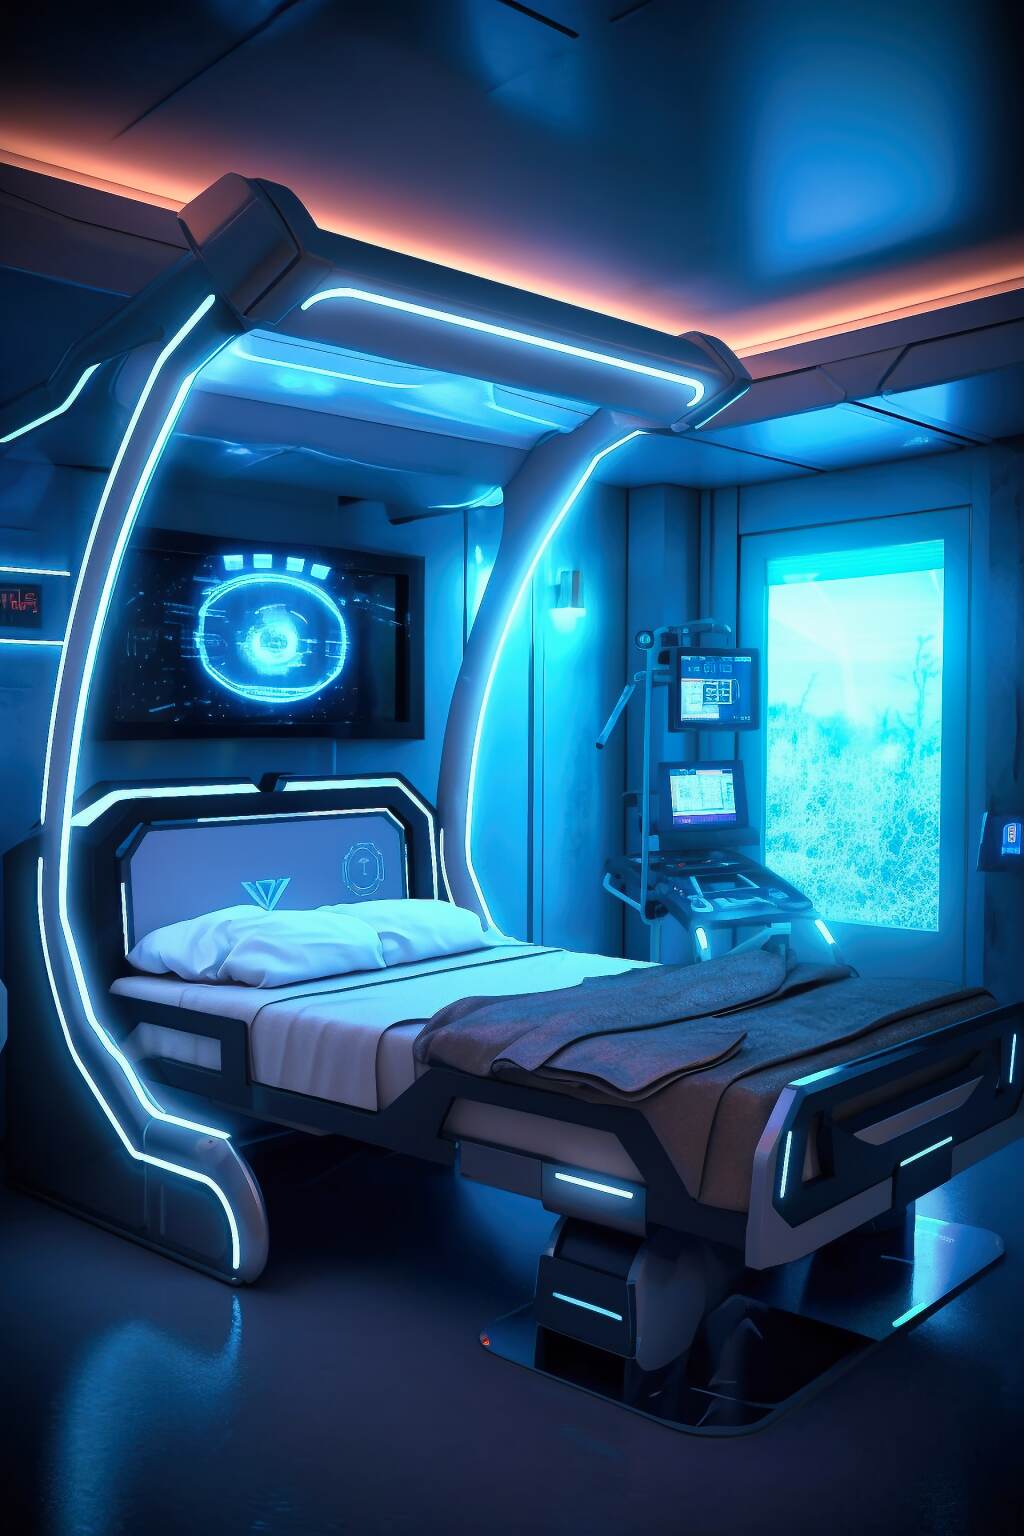 Cyberpunk Smart Sleep Laboratory